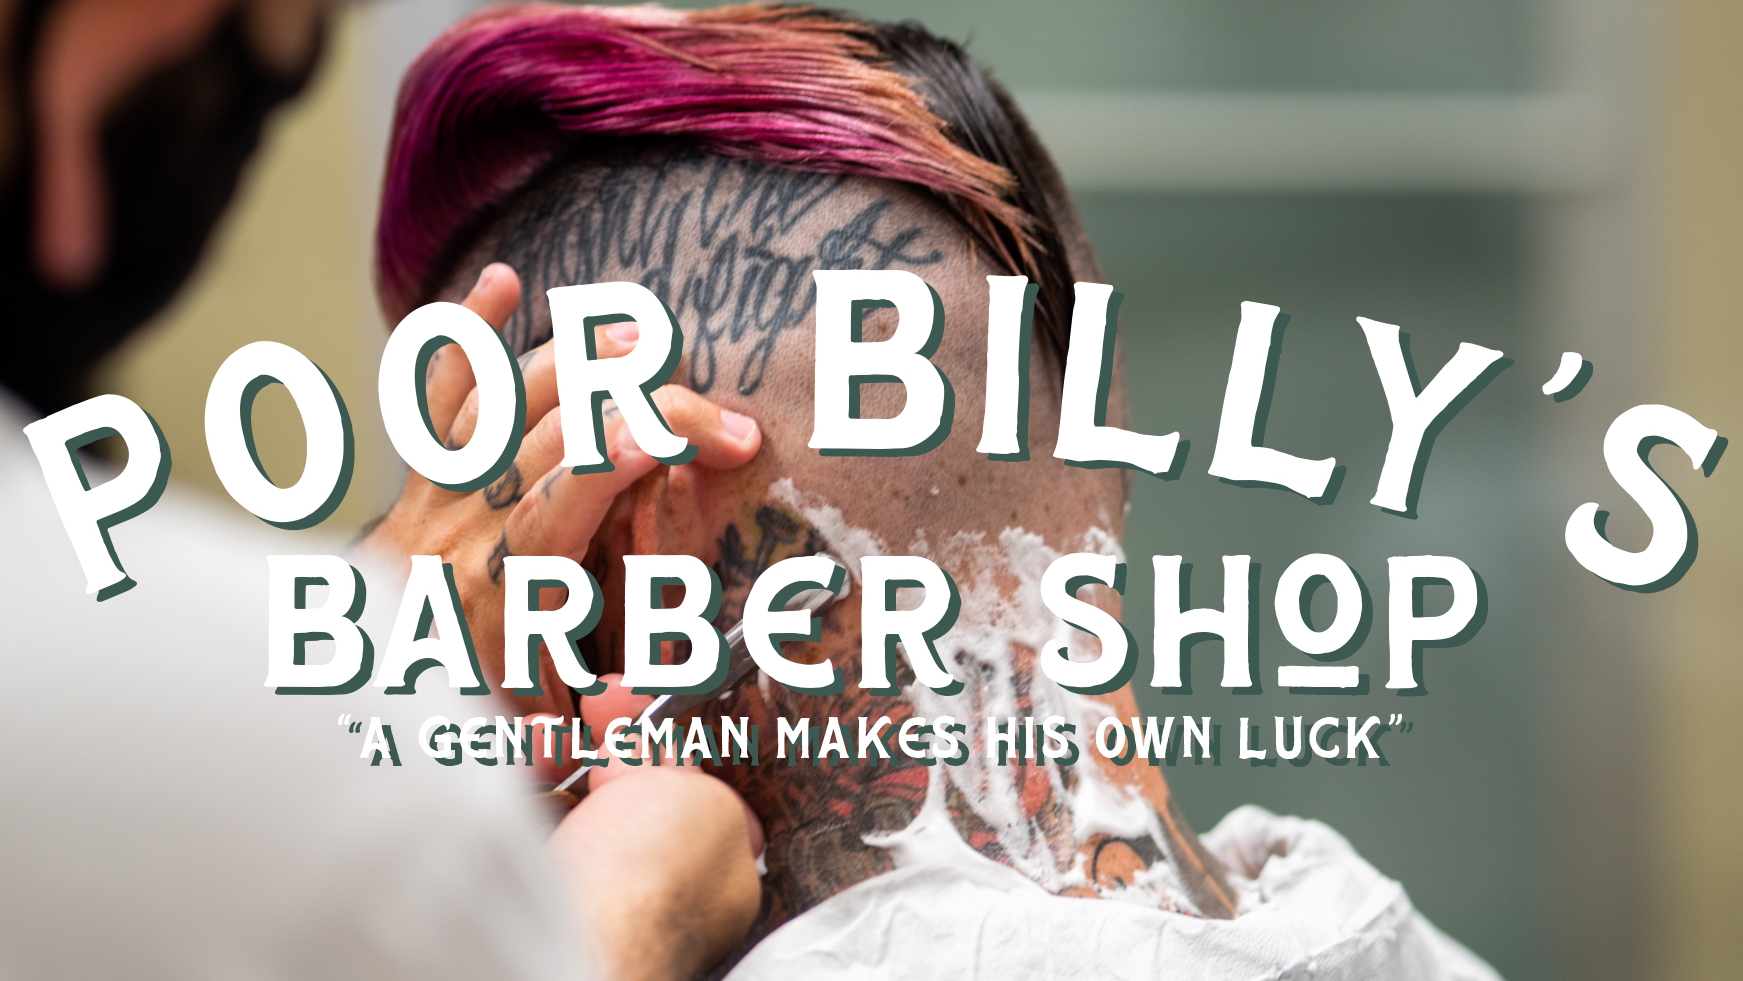 Poor Billy's Barber Shop